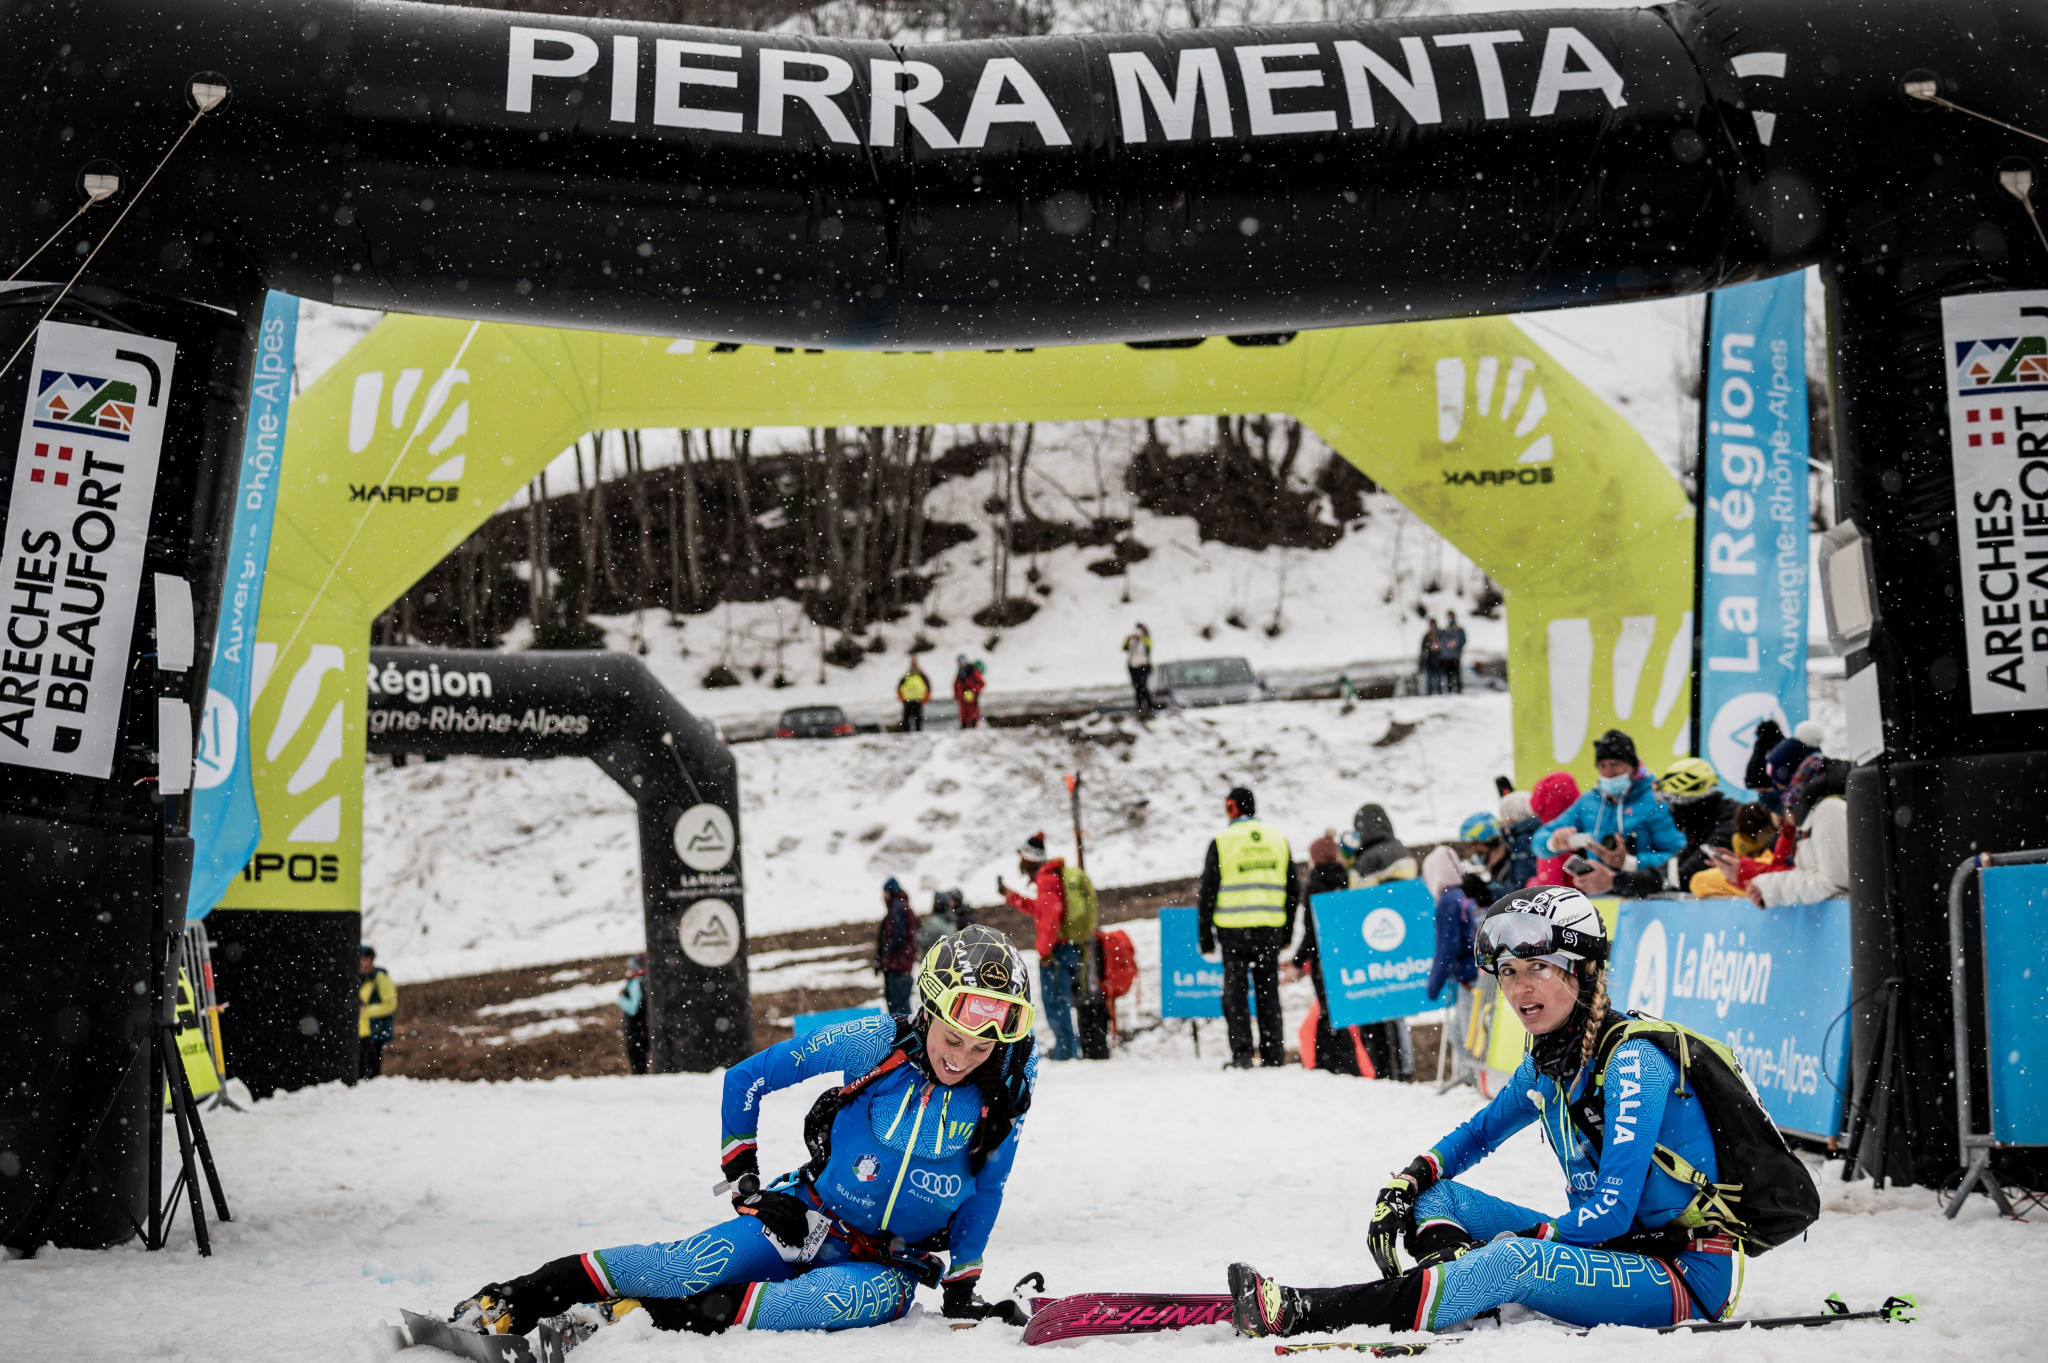 Giulia Murada, left, and Alba de Slivestro, right, won the 35th women's Pierra Menta ©Getty Images